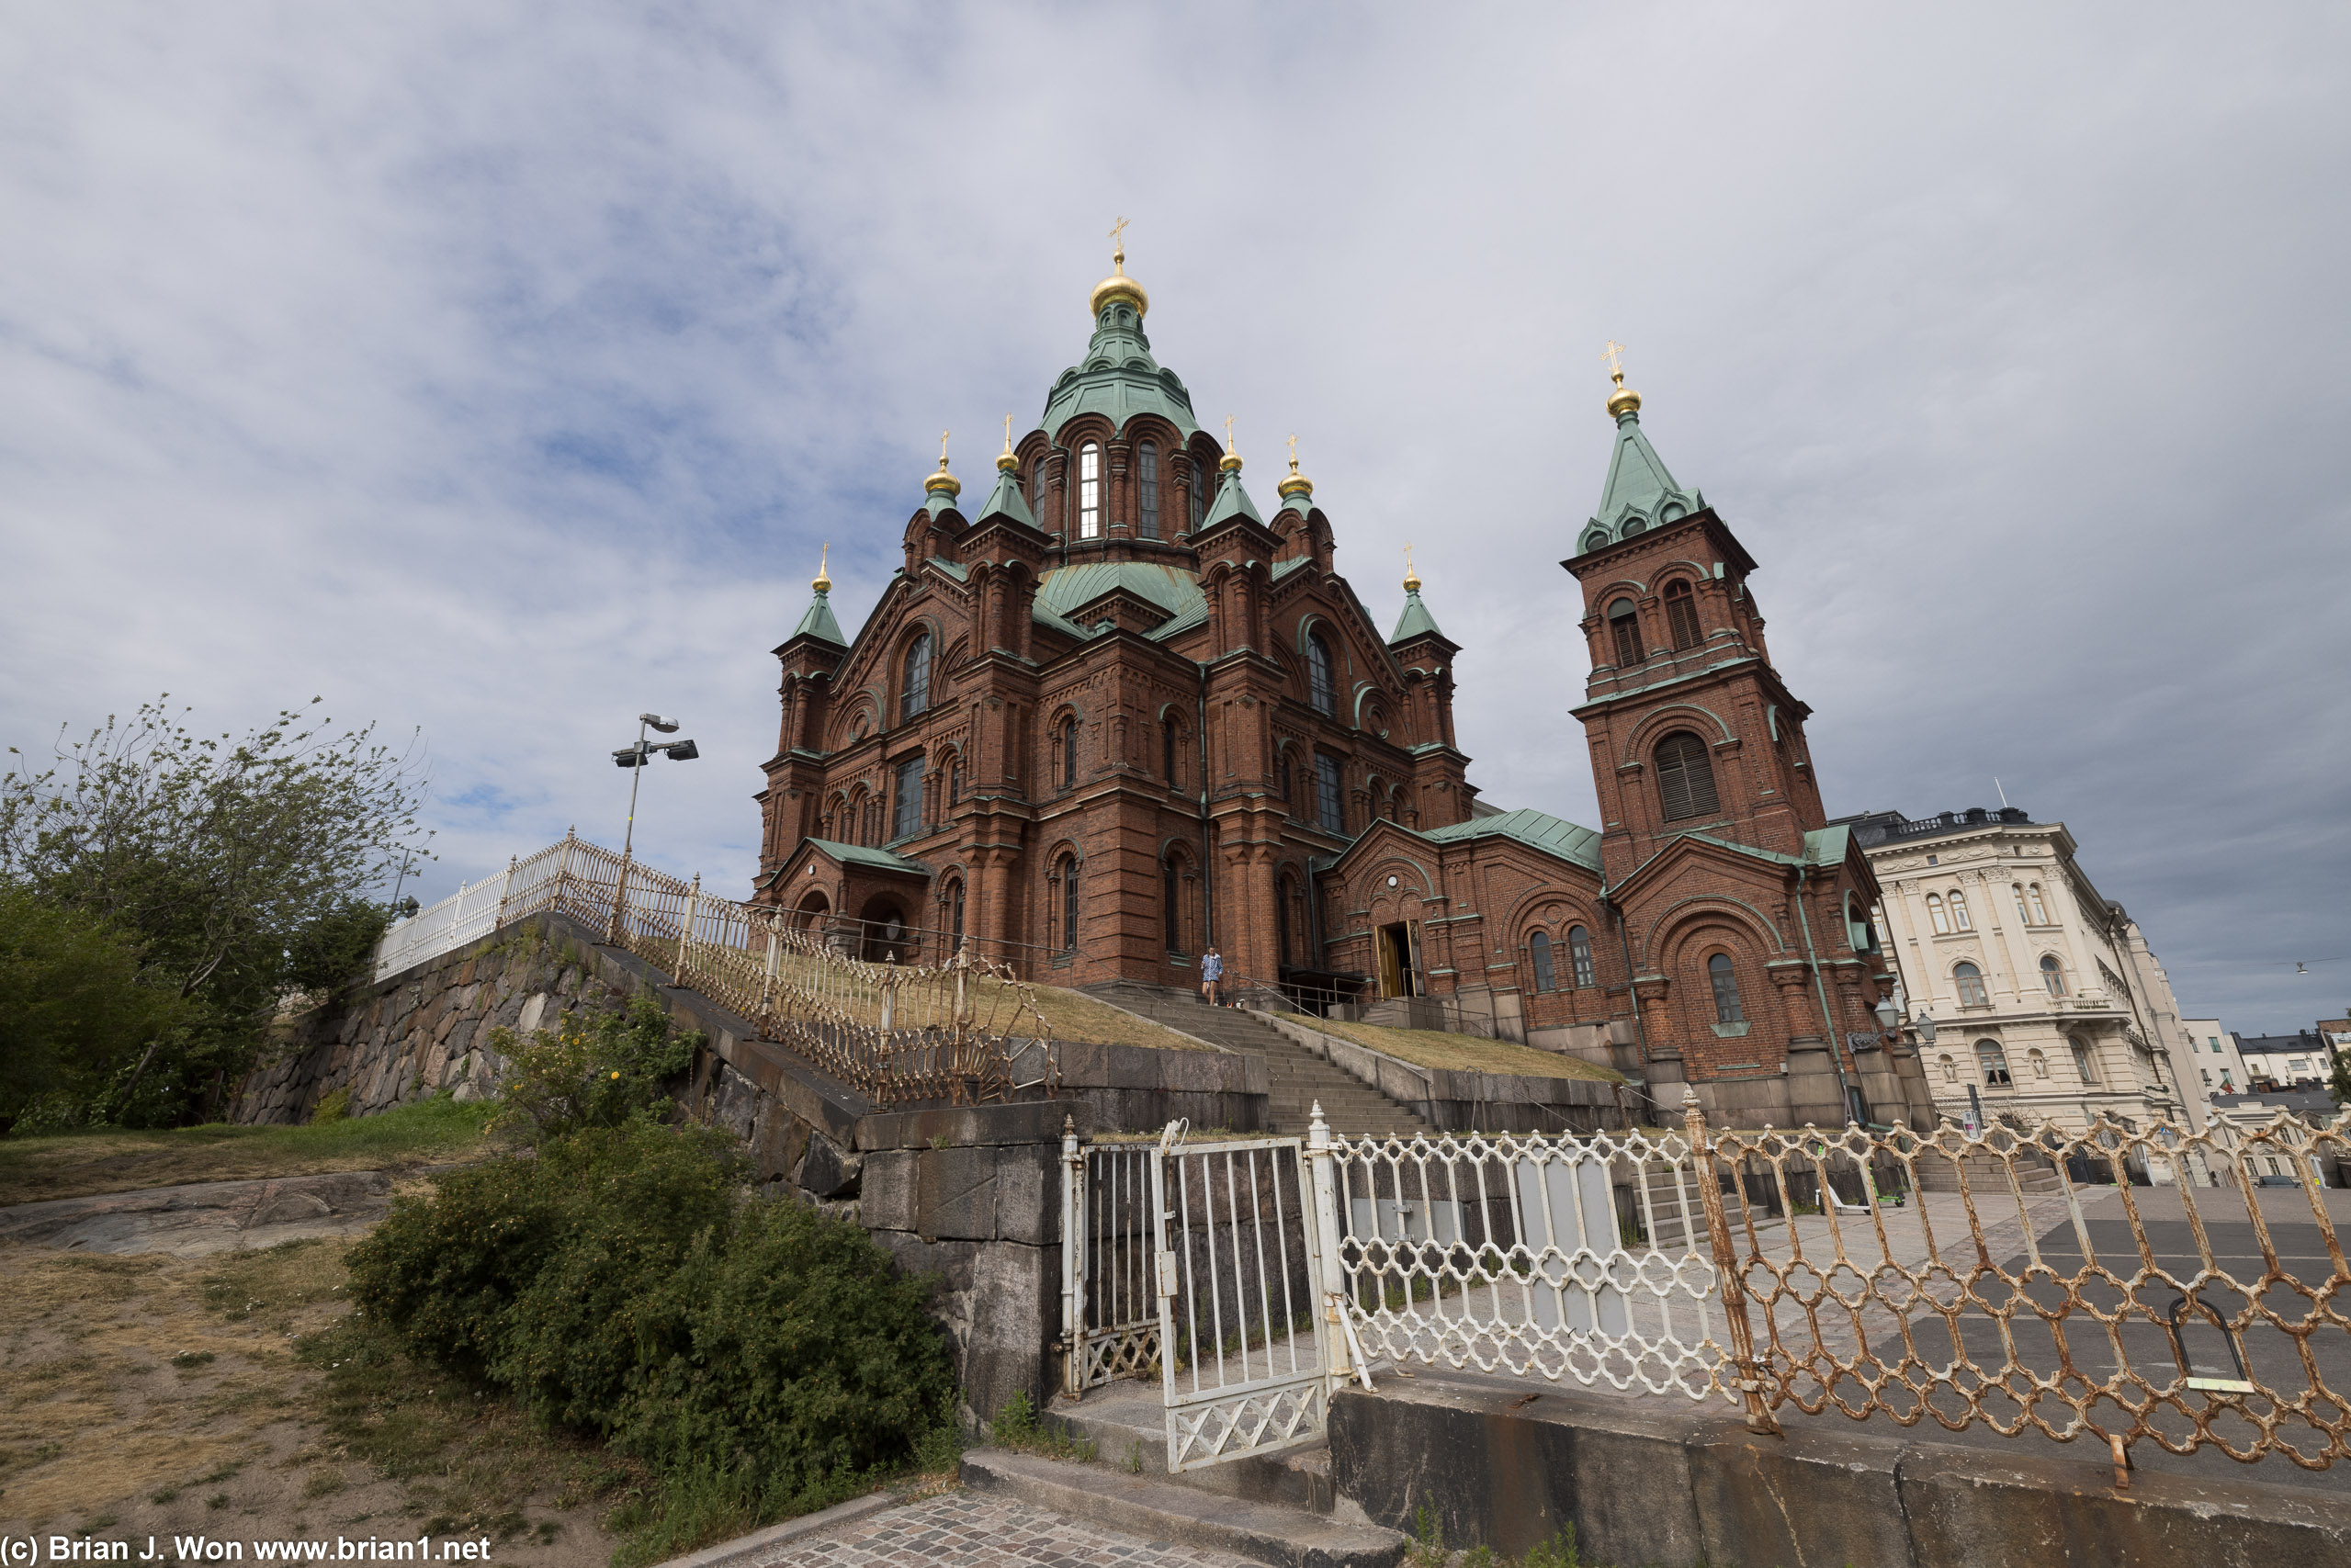 Uspenskin katedraali, a Russian-designed Orthodox cathedral.